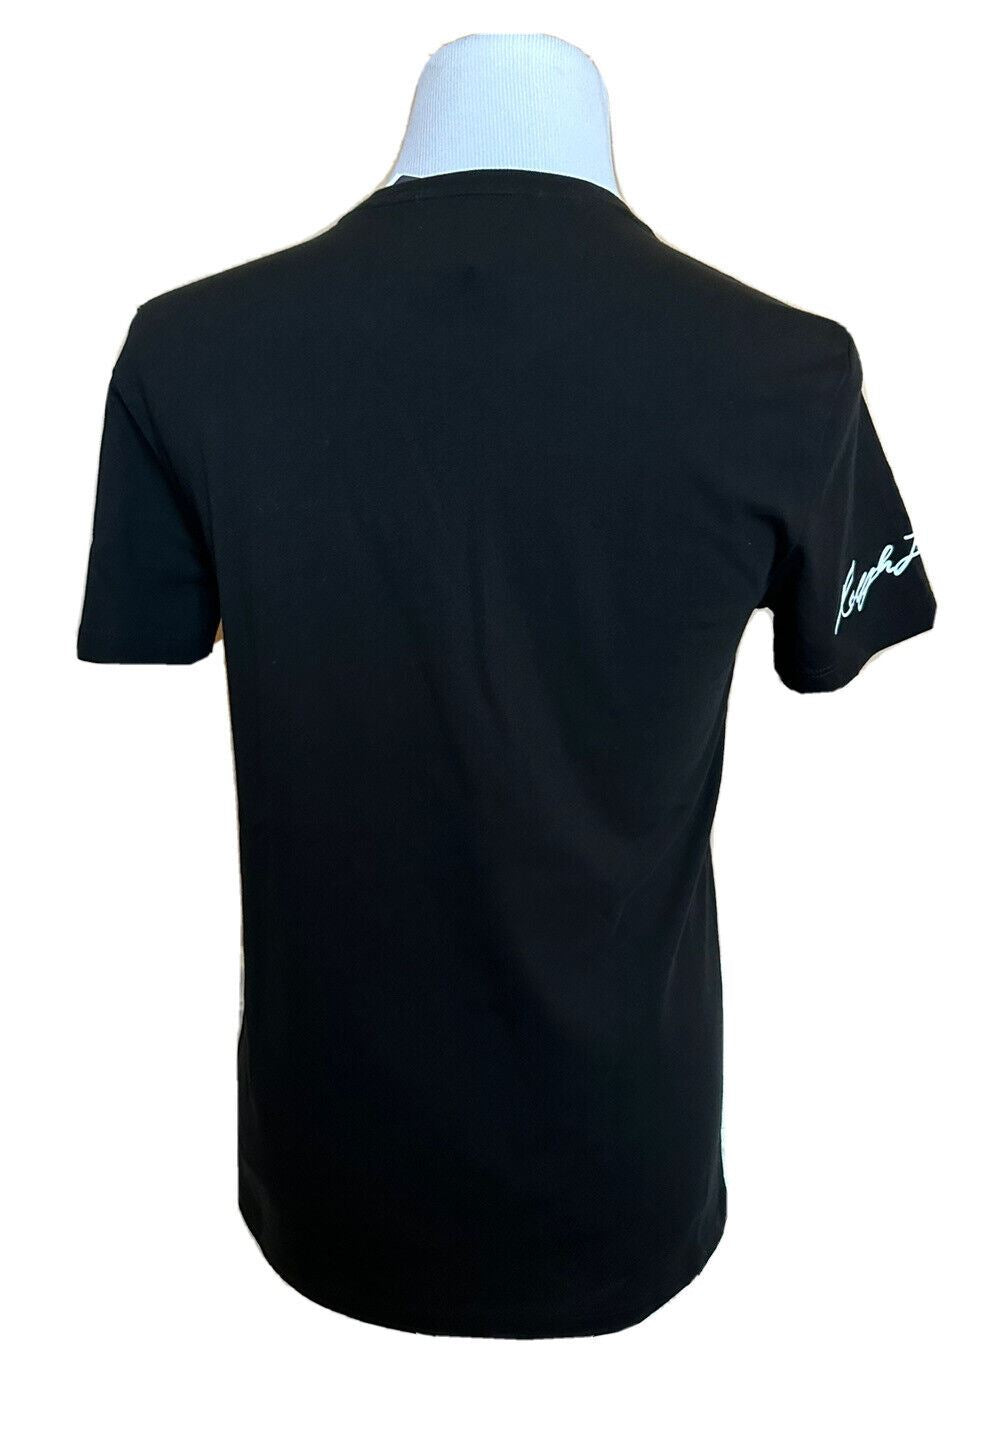 NWT $65 Polo Ralph Lauren Short Sleeve Logo T-shirt Black M